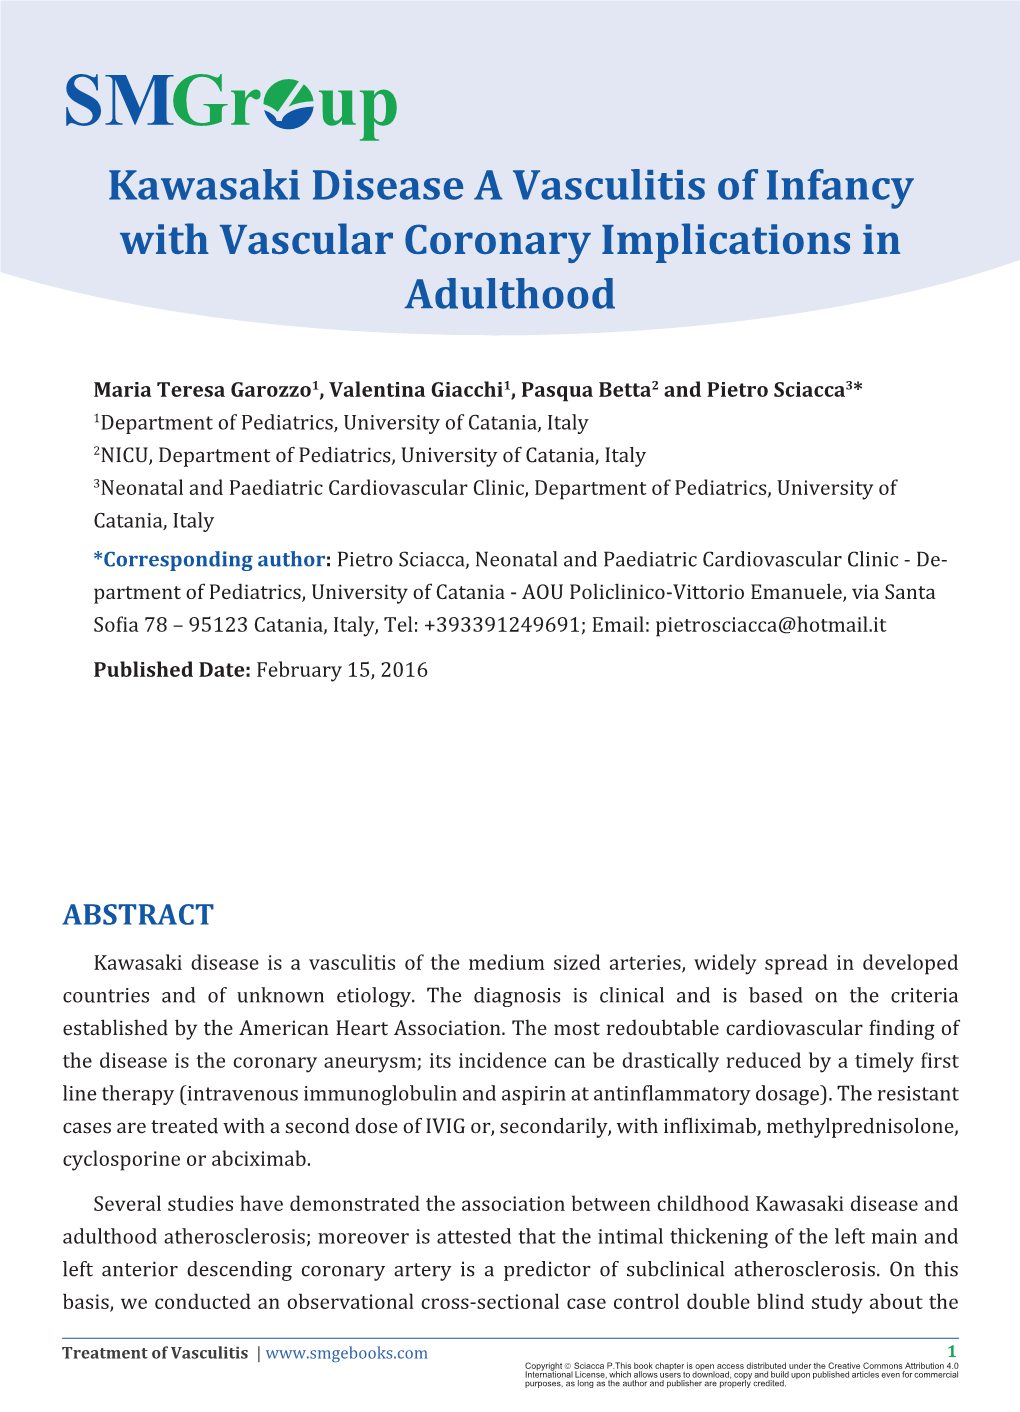 Kawasaki Disease a Vasculitis of Infancy with Vascular Coronary Implications in Adulthood